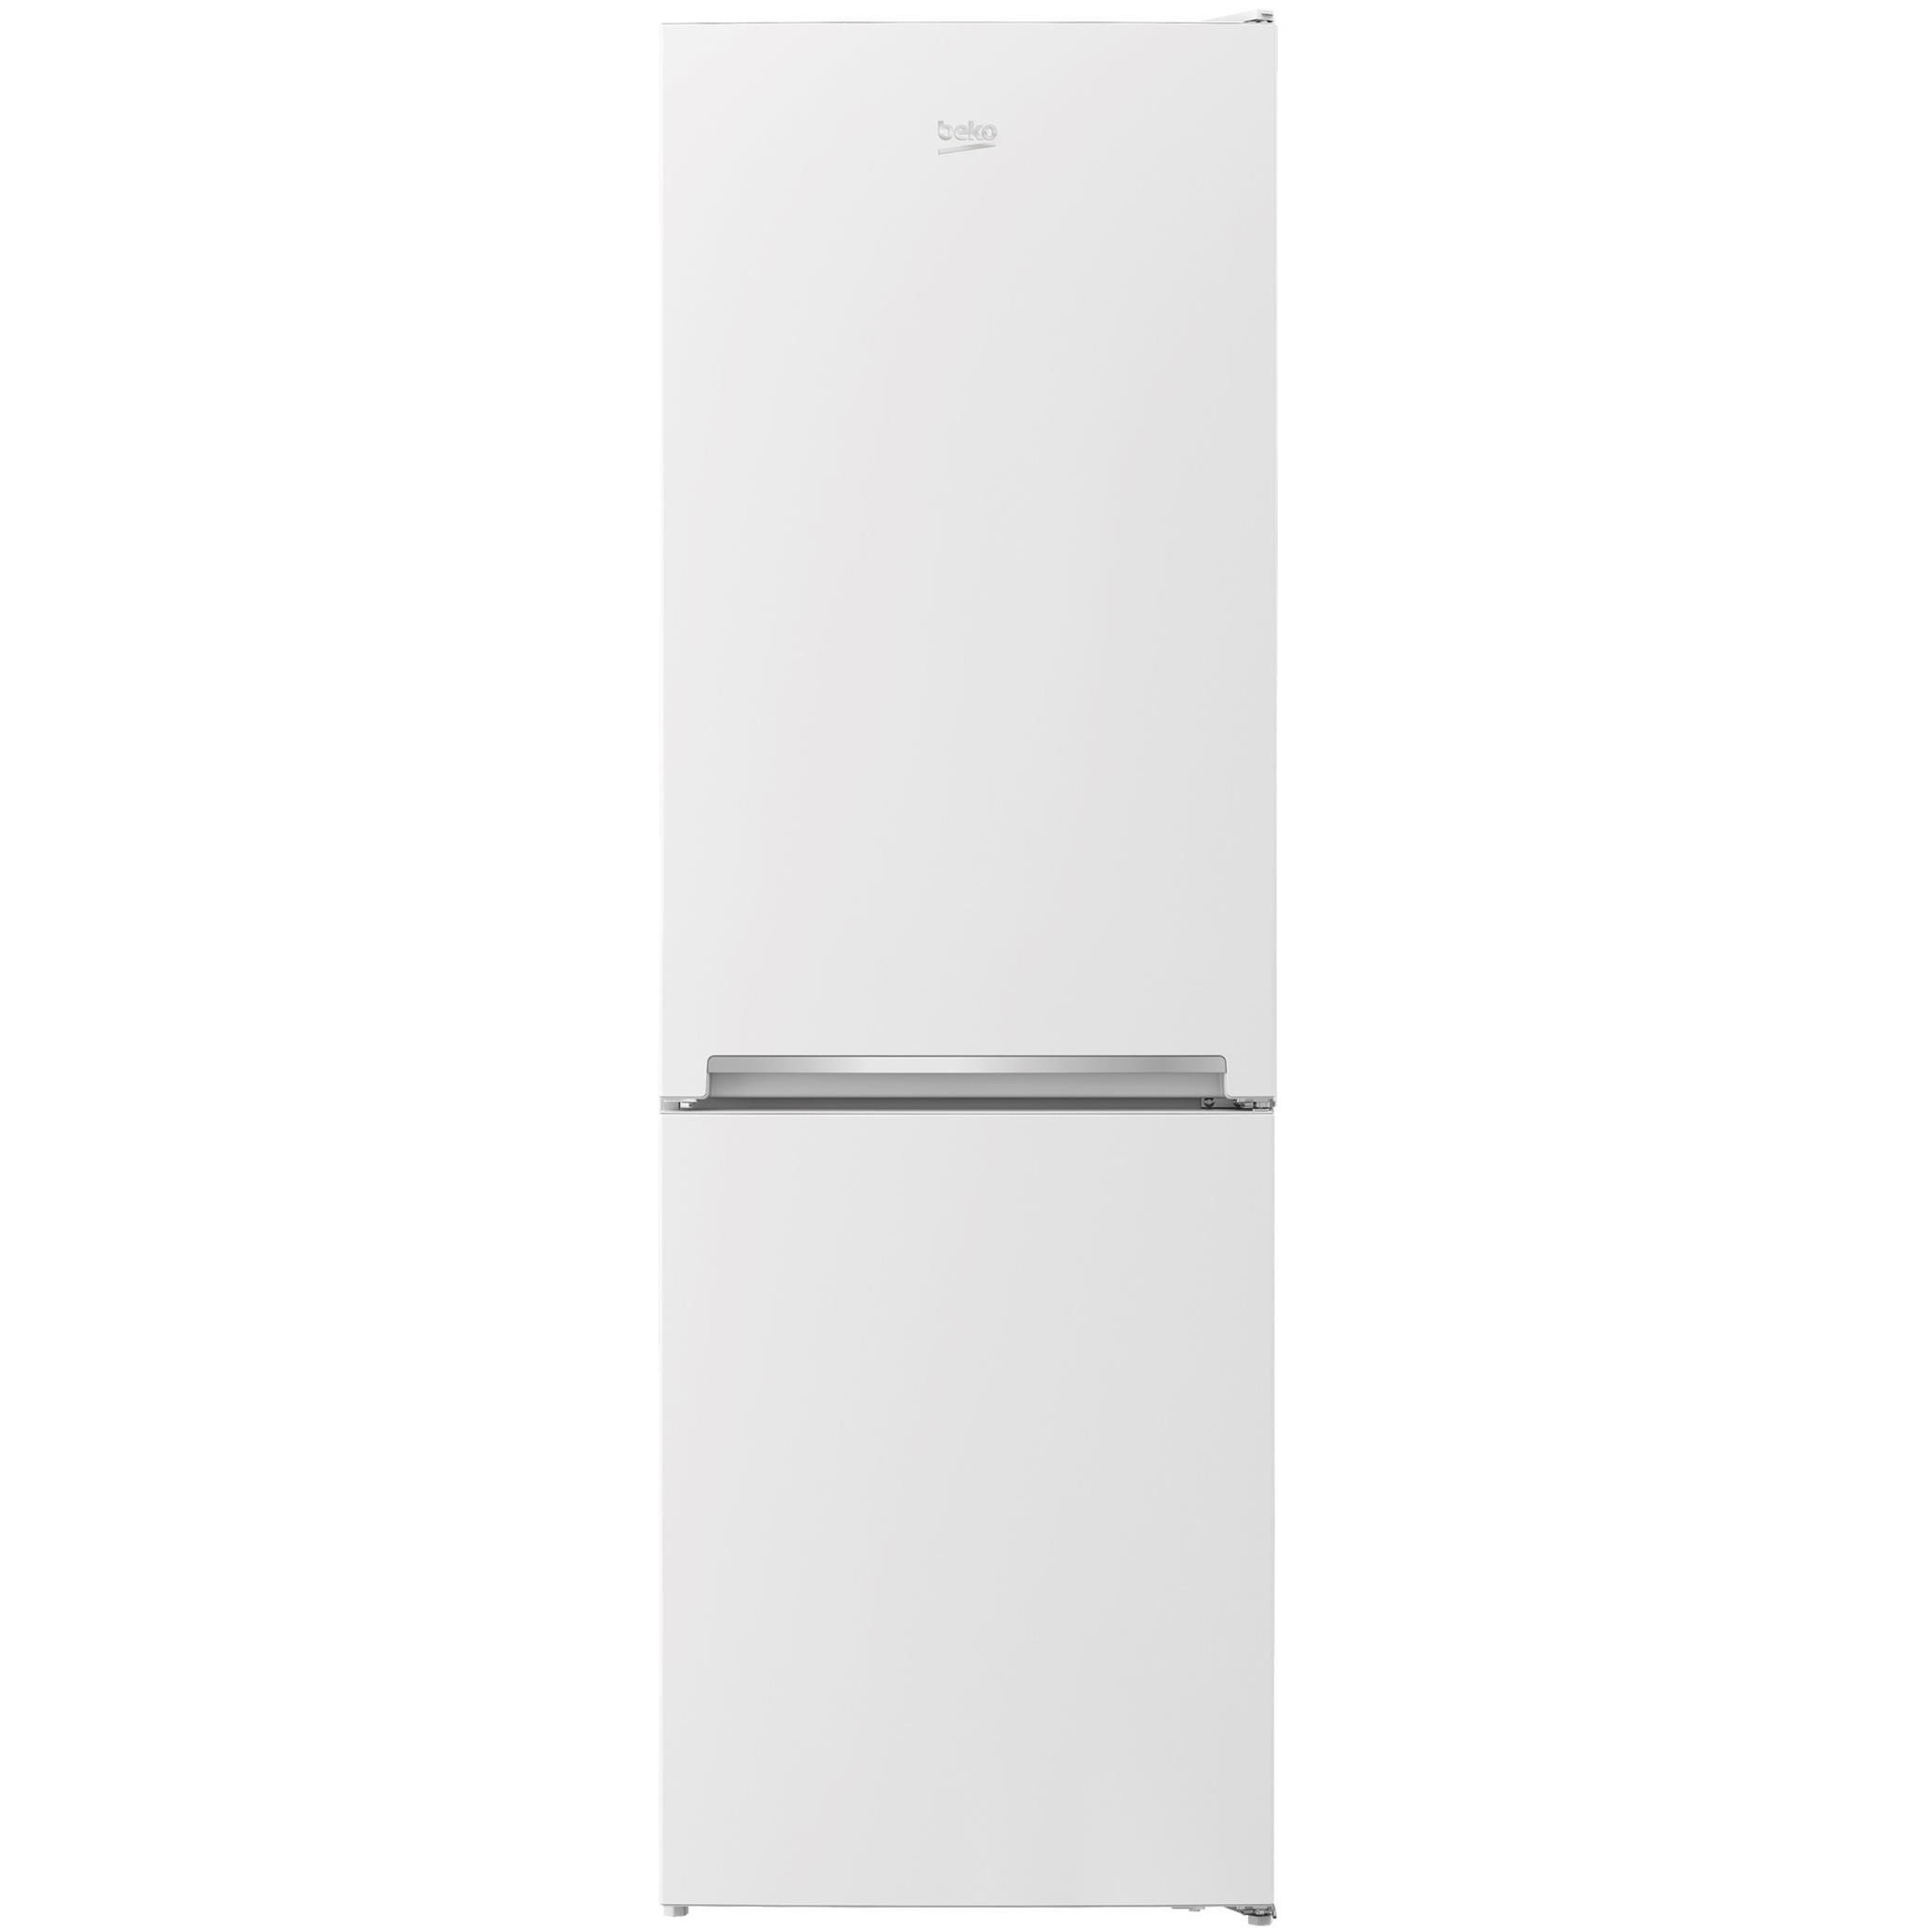 Холодильник Beko RCNA 366I40 WN